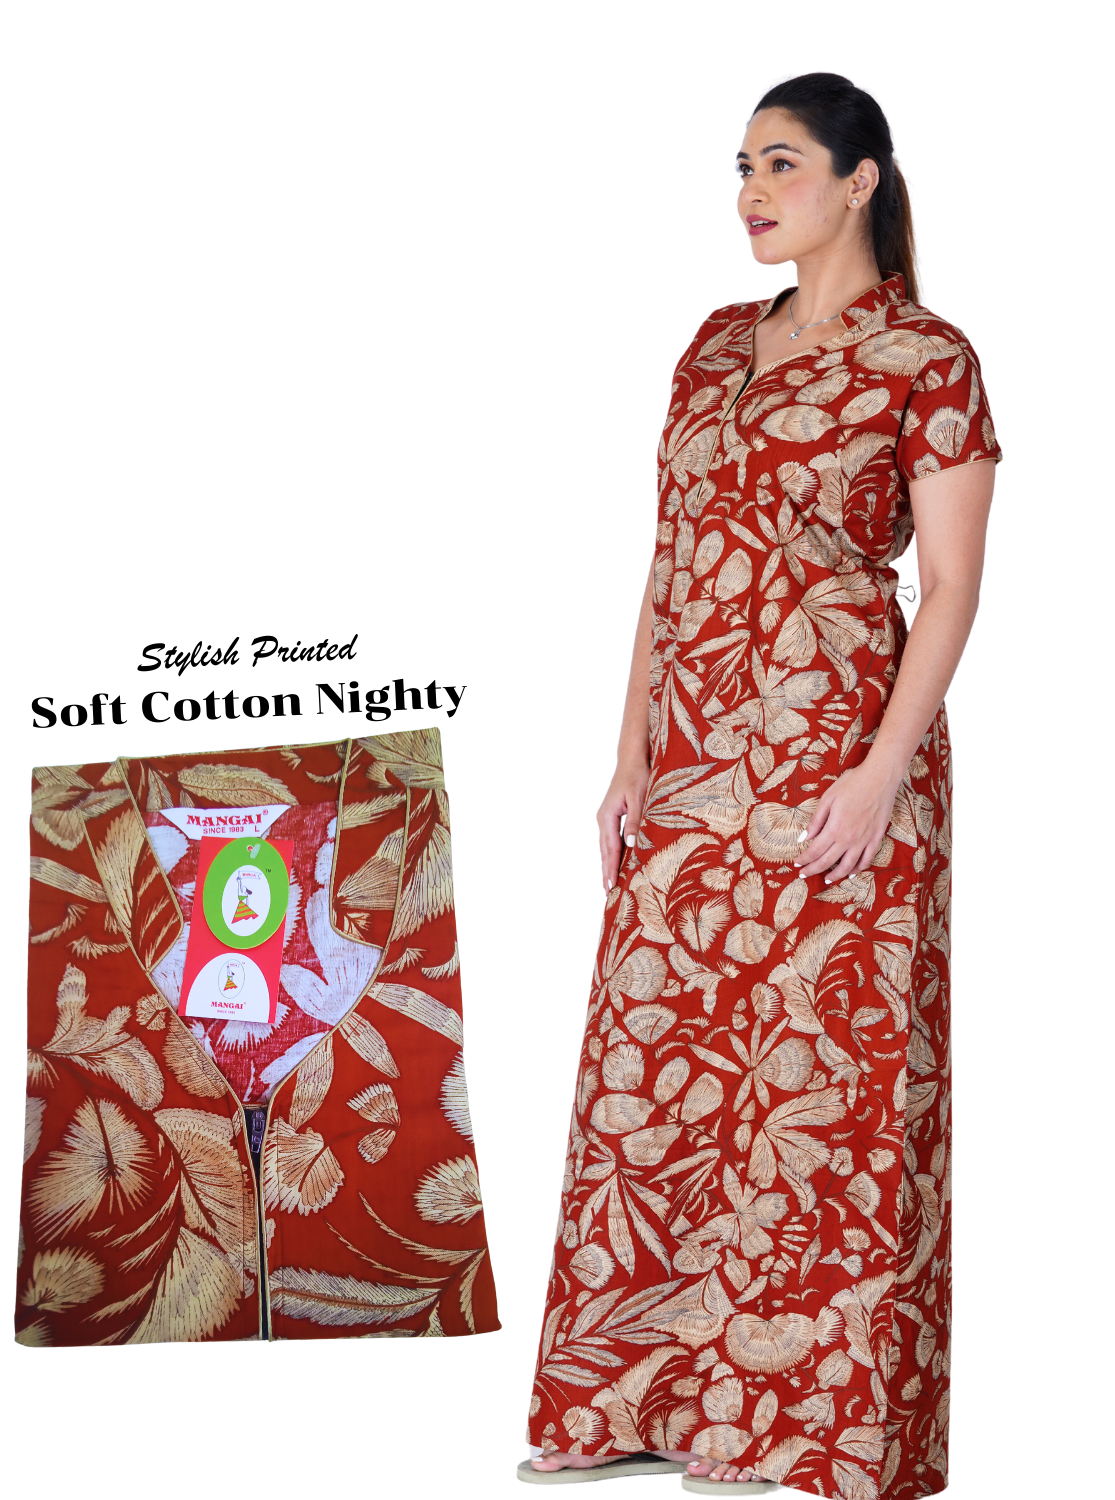 MANGAI New Premium Cotton Printed Nighties- All Over Printed Stylish Nightwear for Stylish Women | Updated Design's | Beautiful Collar Nighty